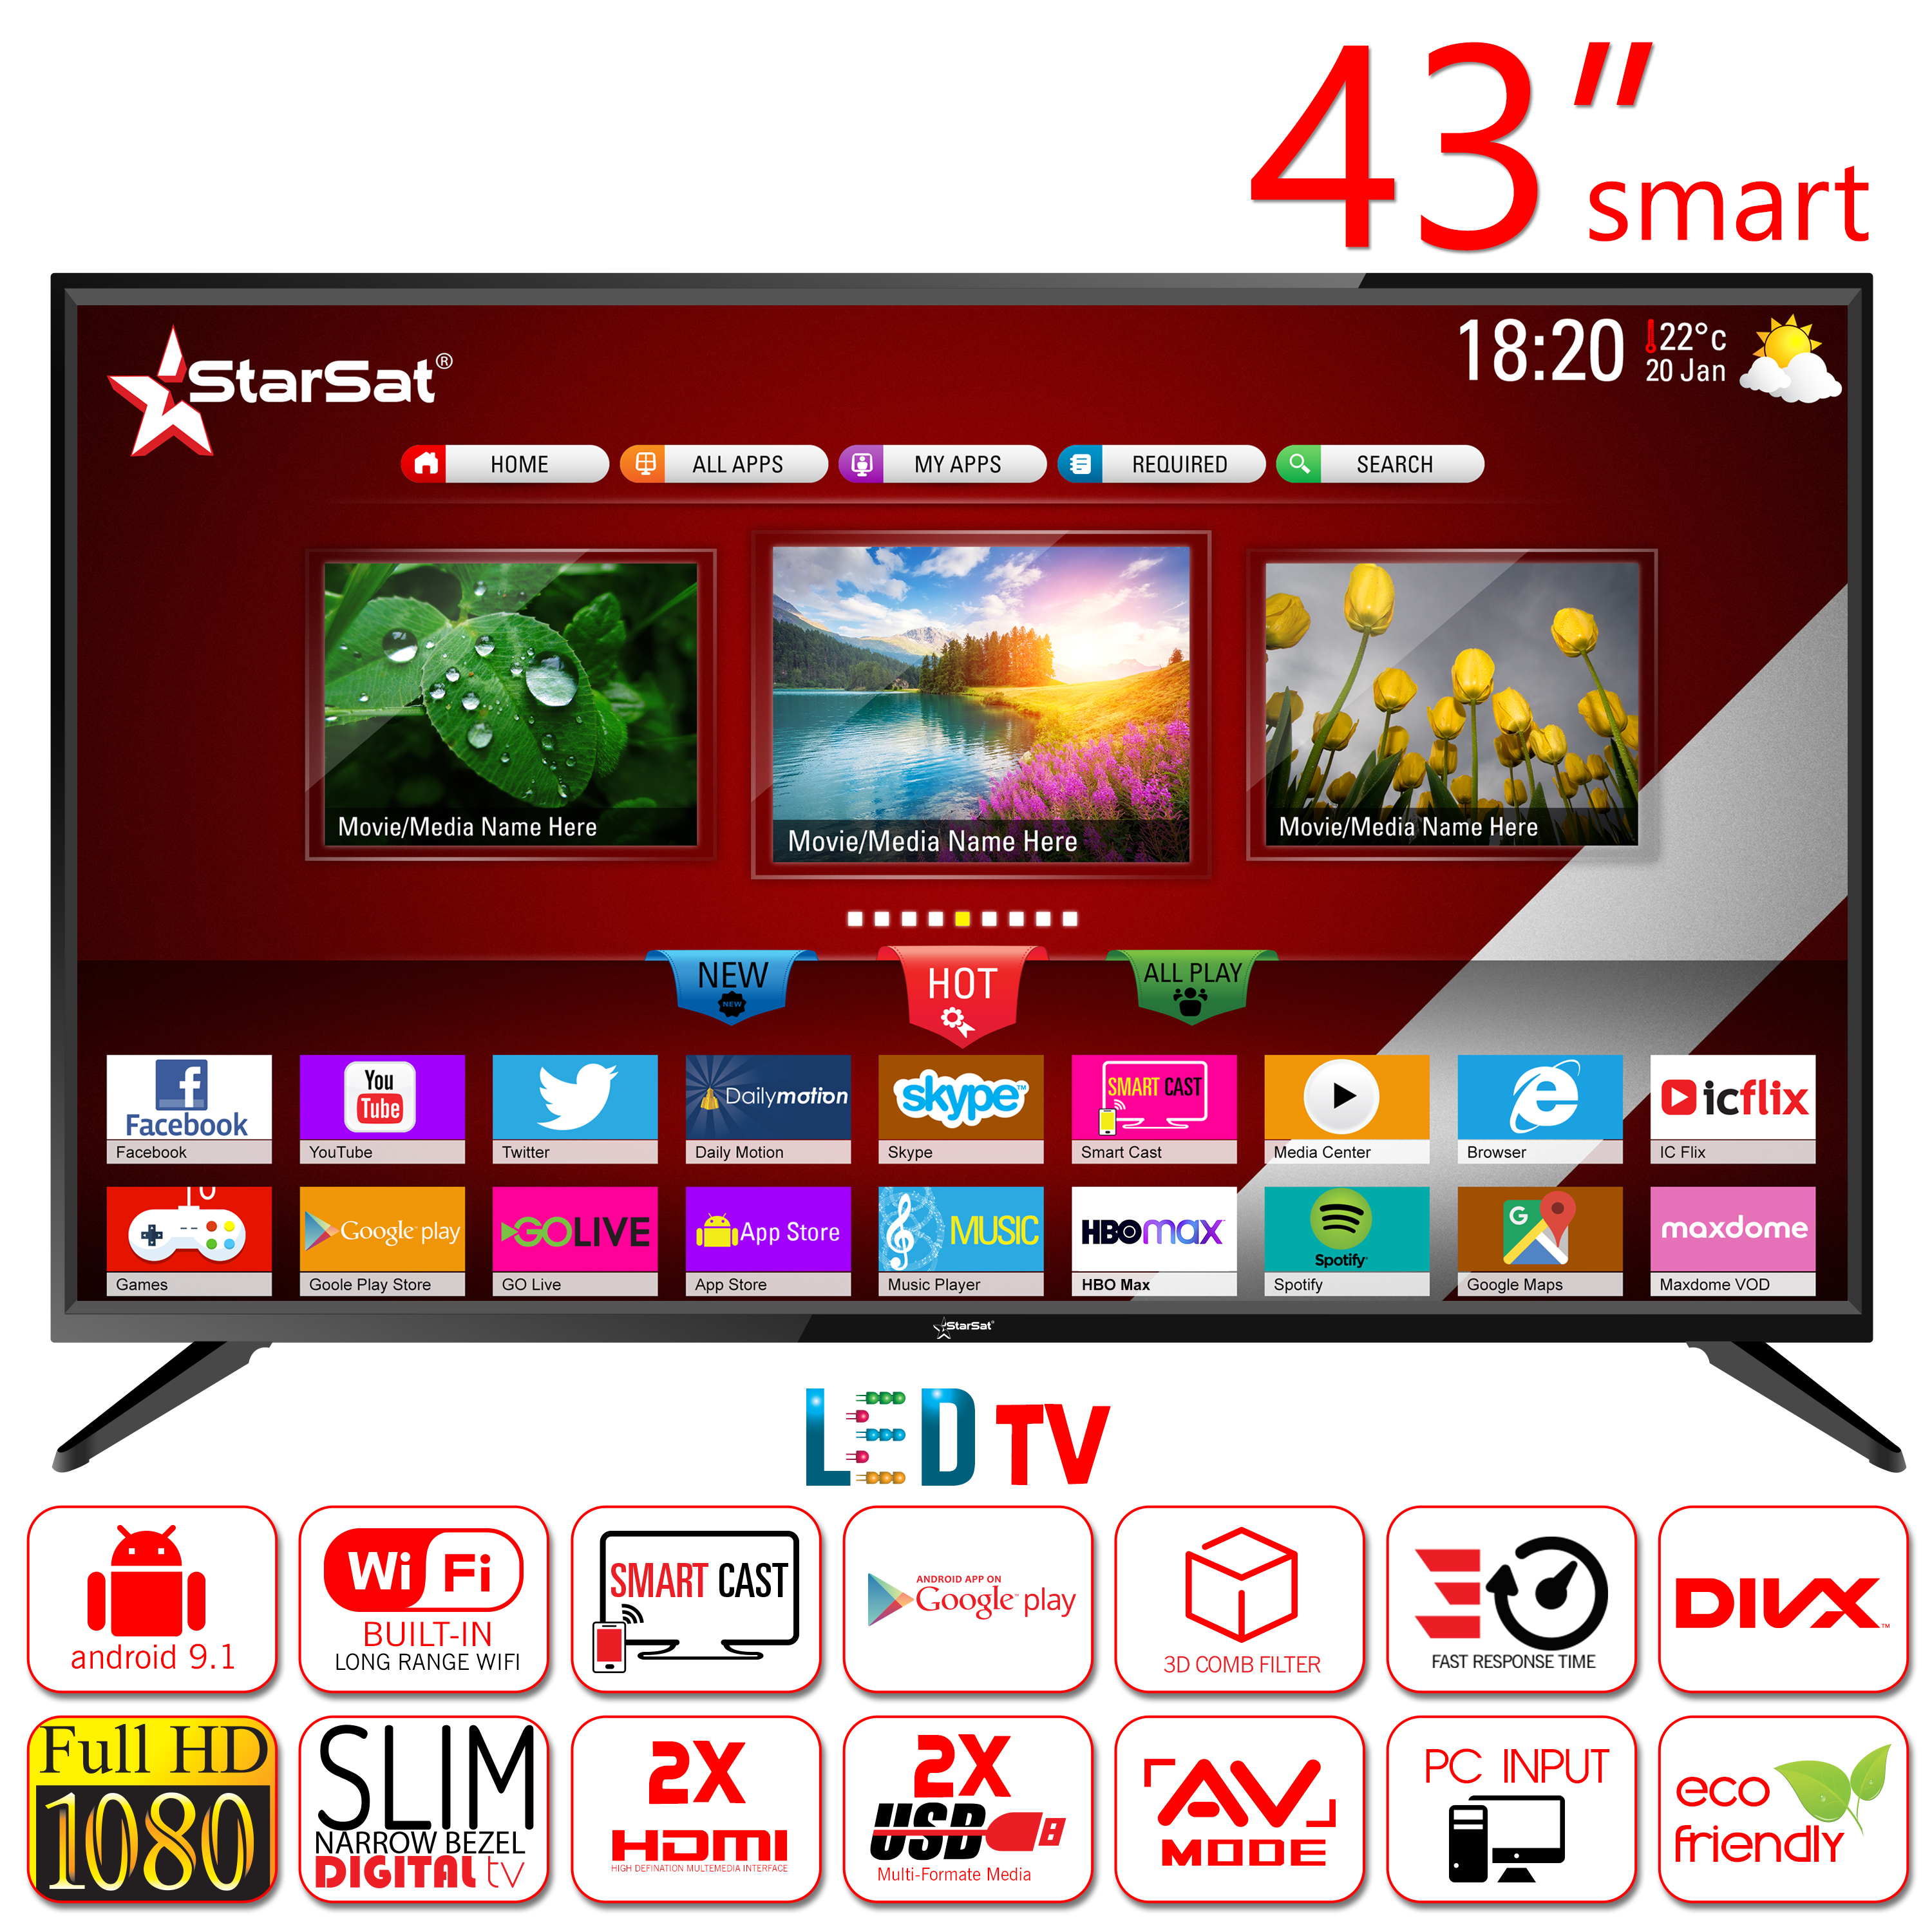 StarSat 43" Full HD Android9.1 Smart LED TV, Slim bezel design, 2xHDMI and 2xUSB Ports, WiFi, Smart Cast, PlayStore, AV and PC mode